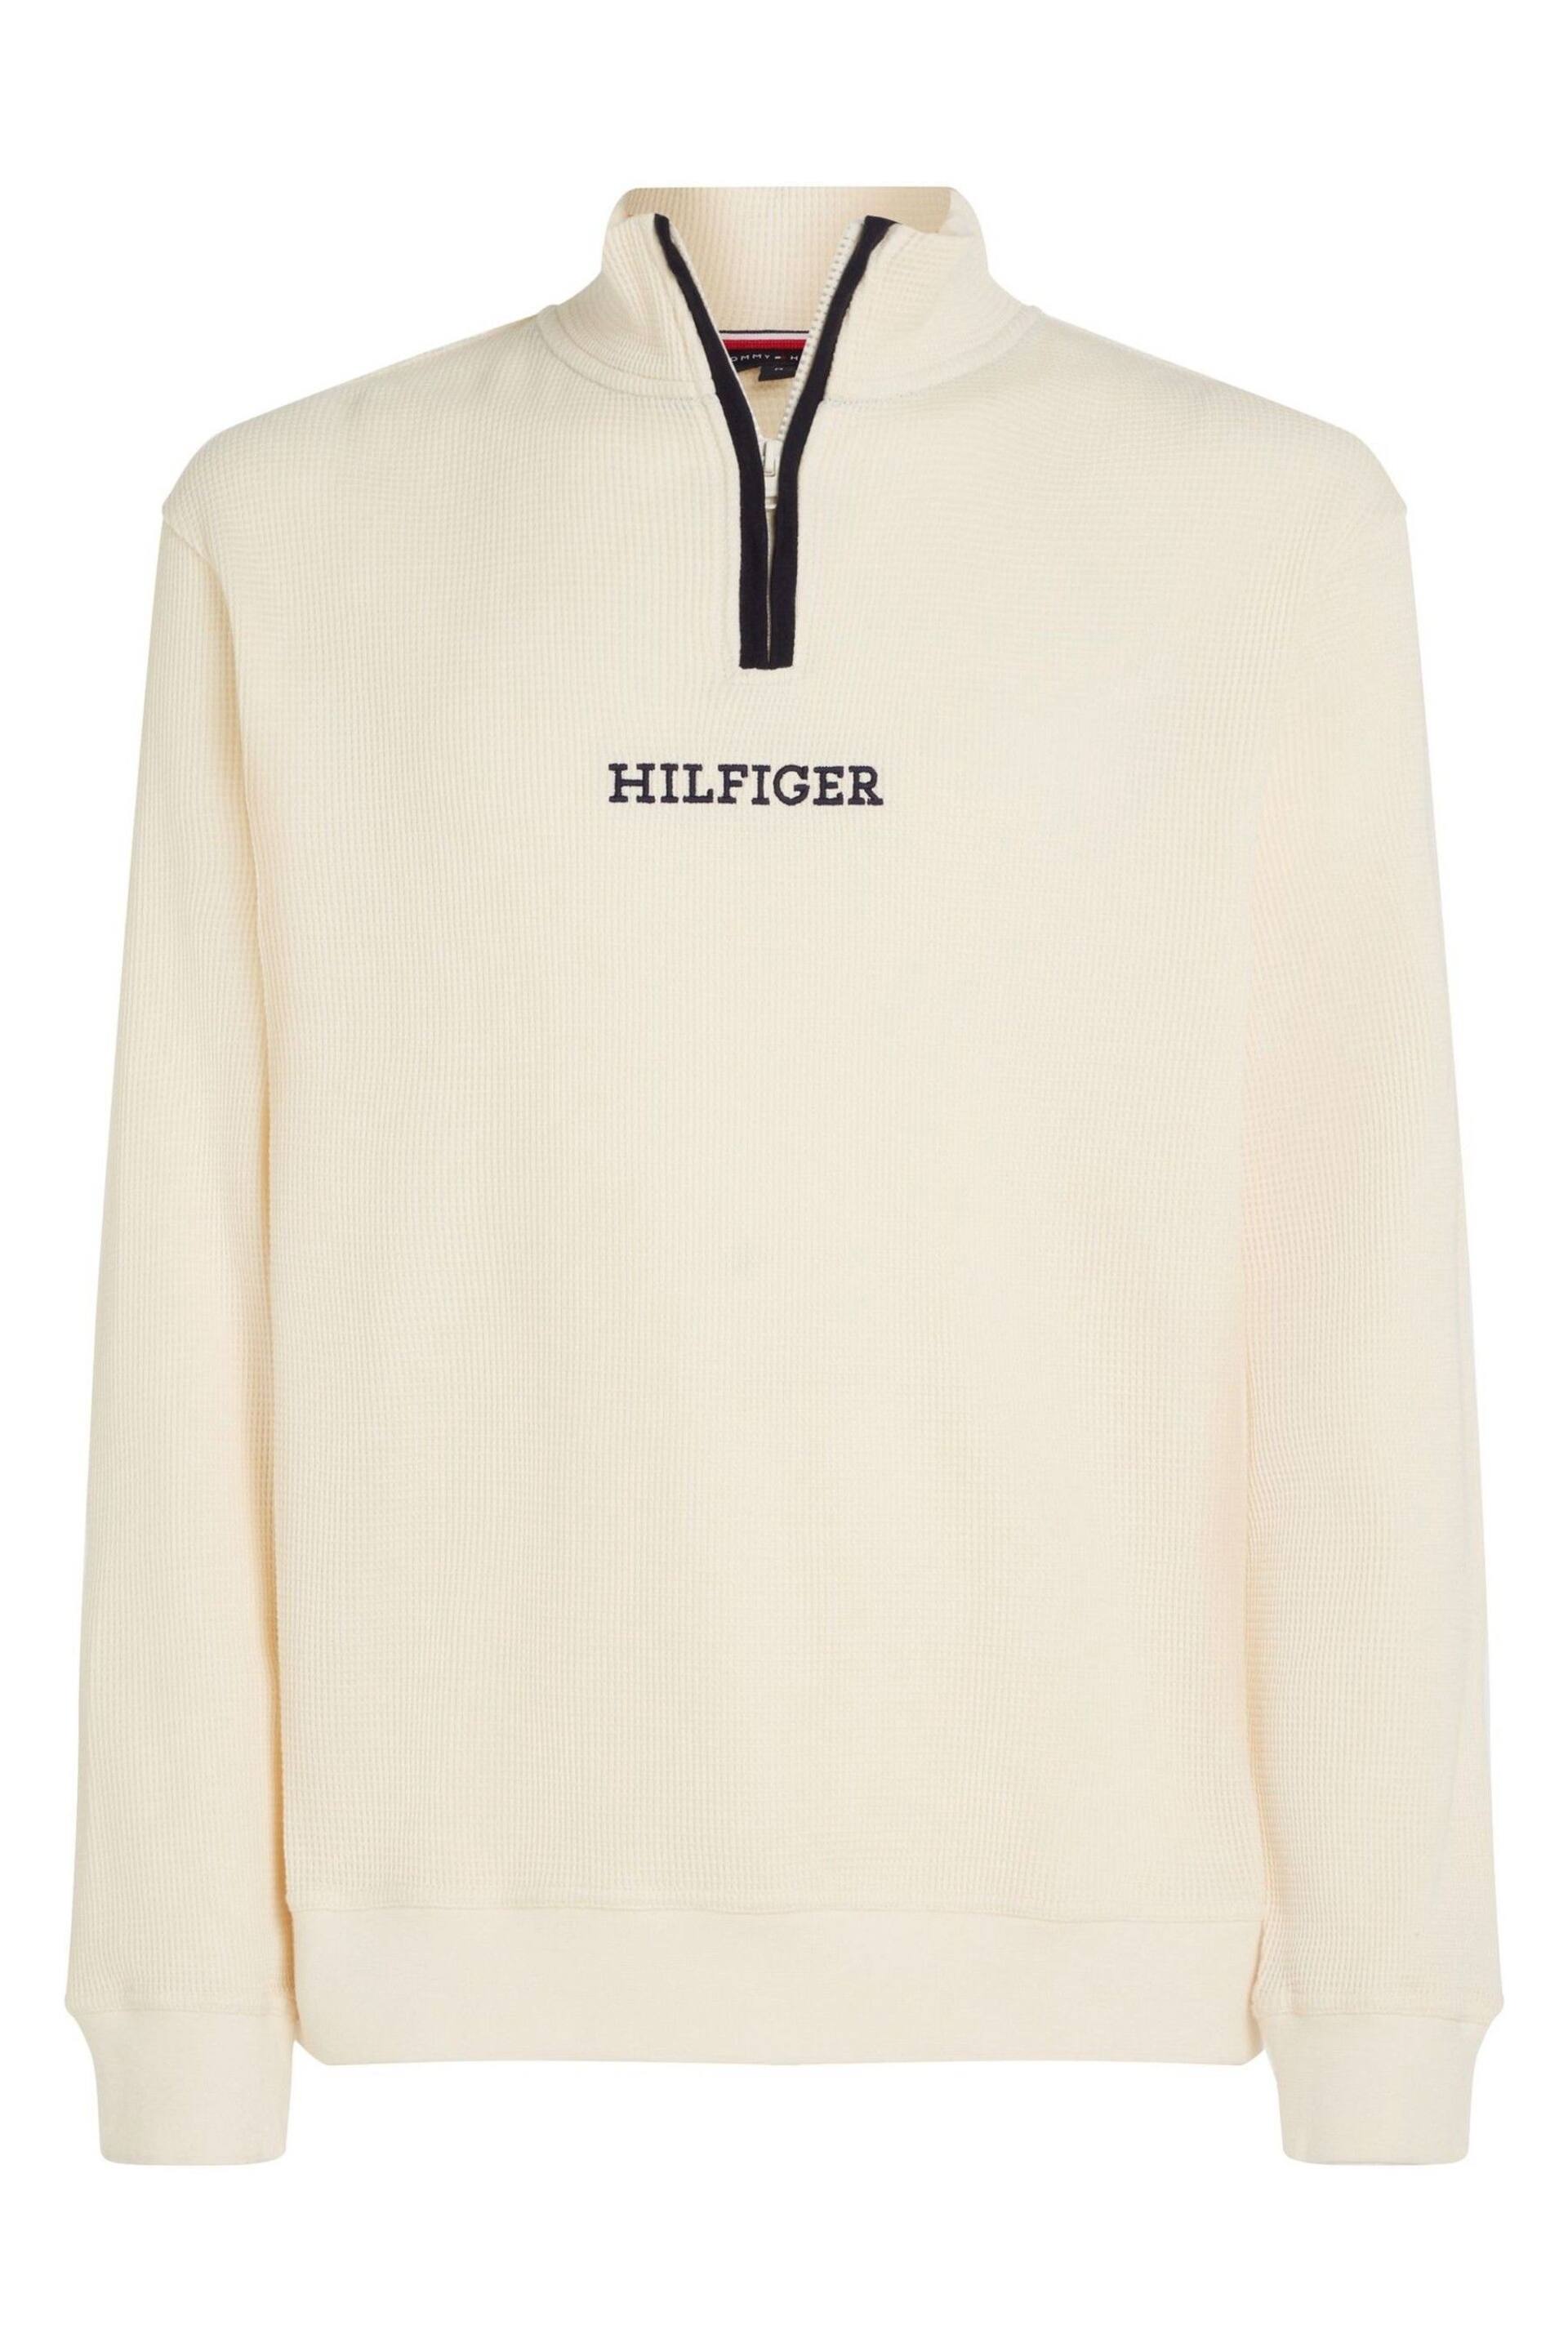 Tommy Hilfiger Cream Half Zip Sweater - Image 4 of 6